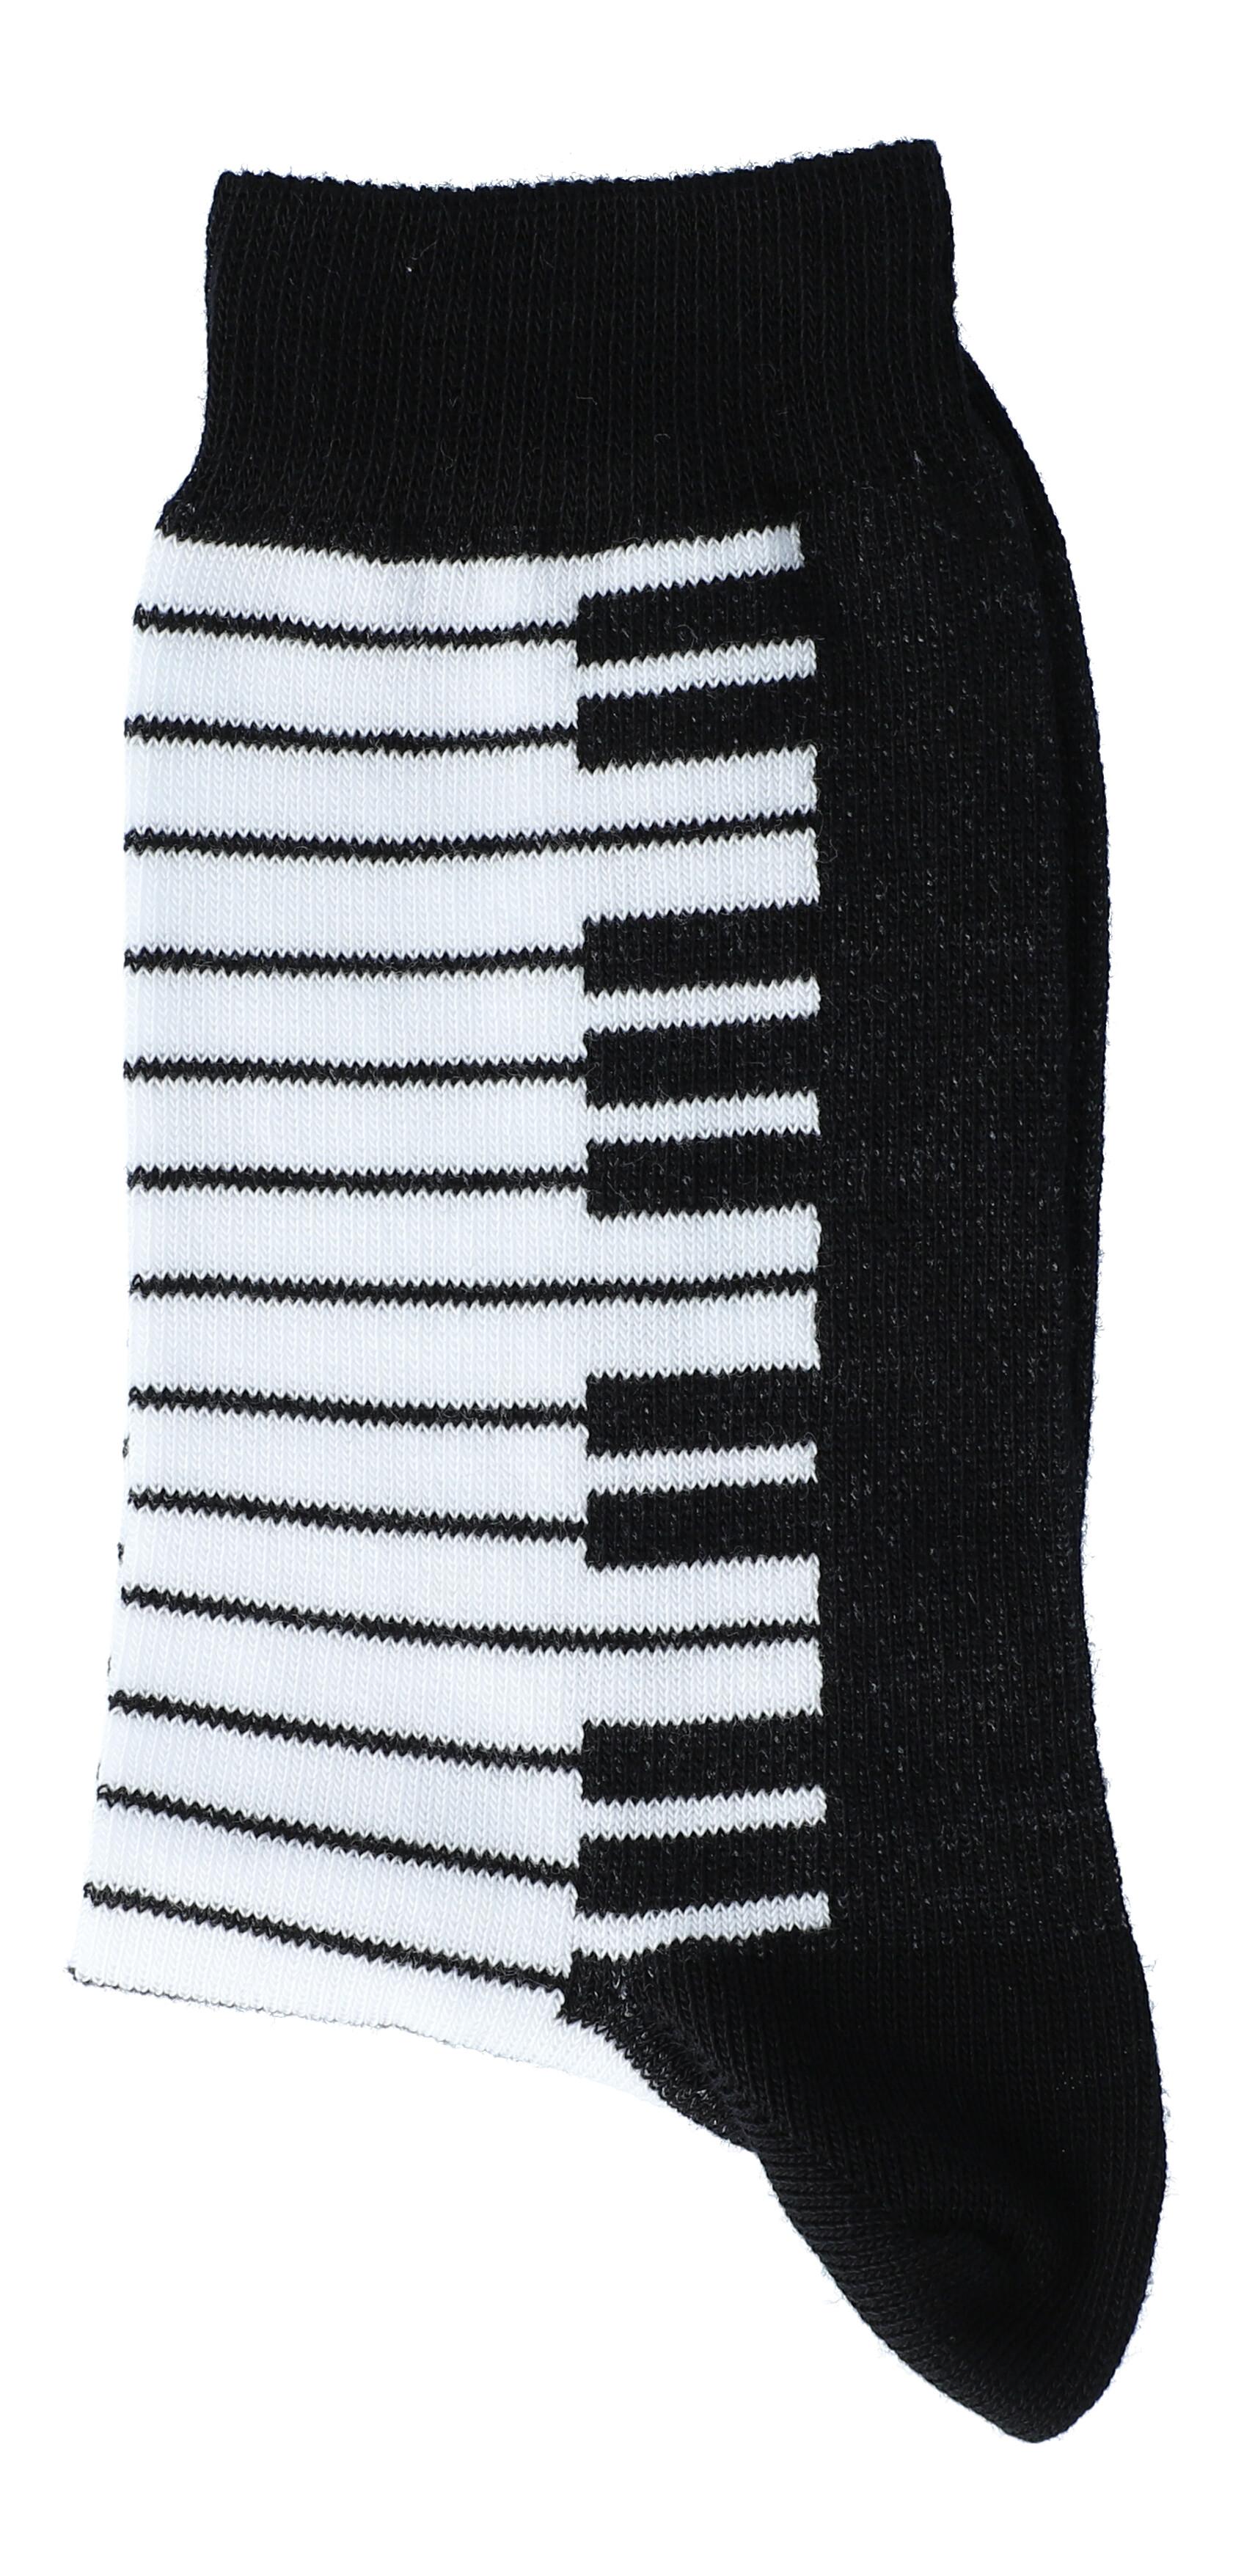 Socken Tastatur -Schwarz Gr. 27-30